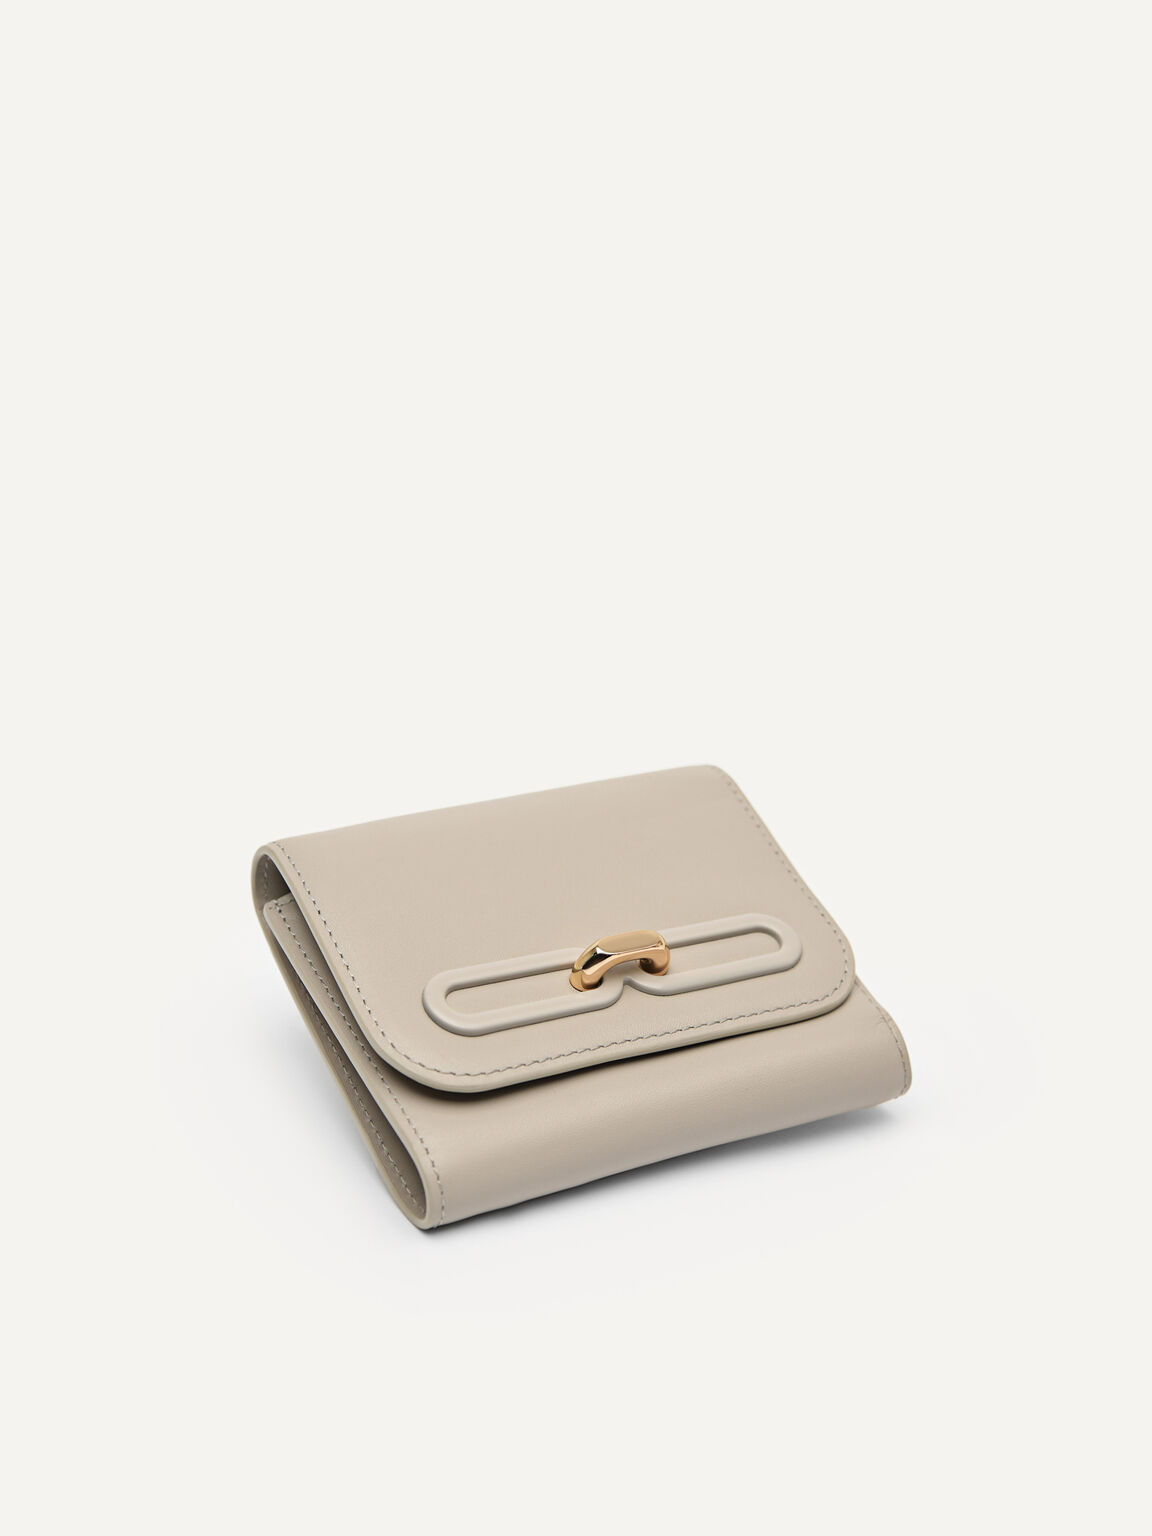 PEDRO Studio Leather Tri-Fold Wallet, Taupe, hi-res